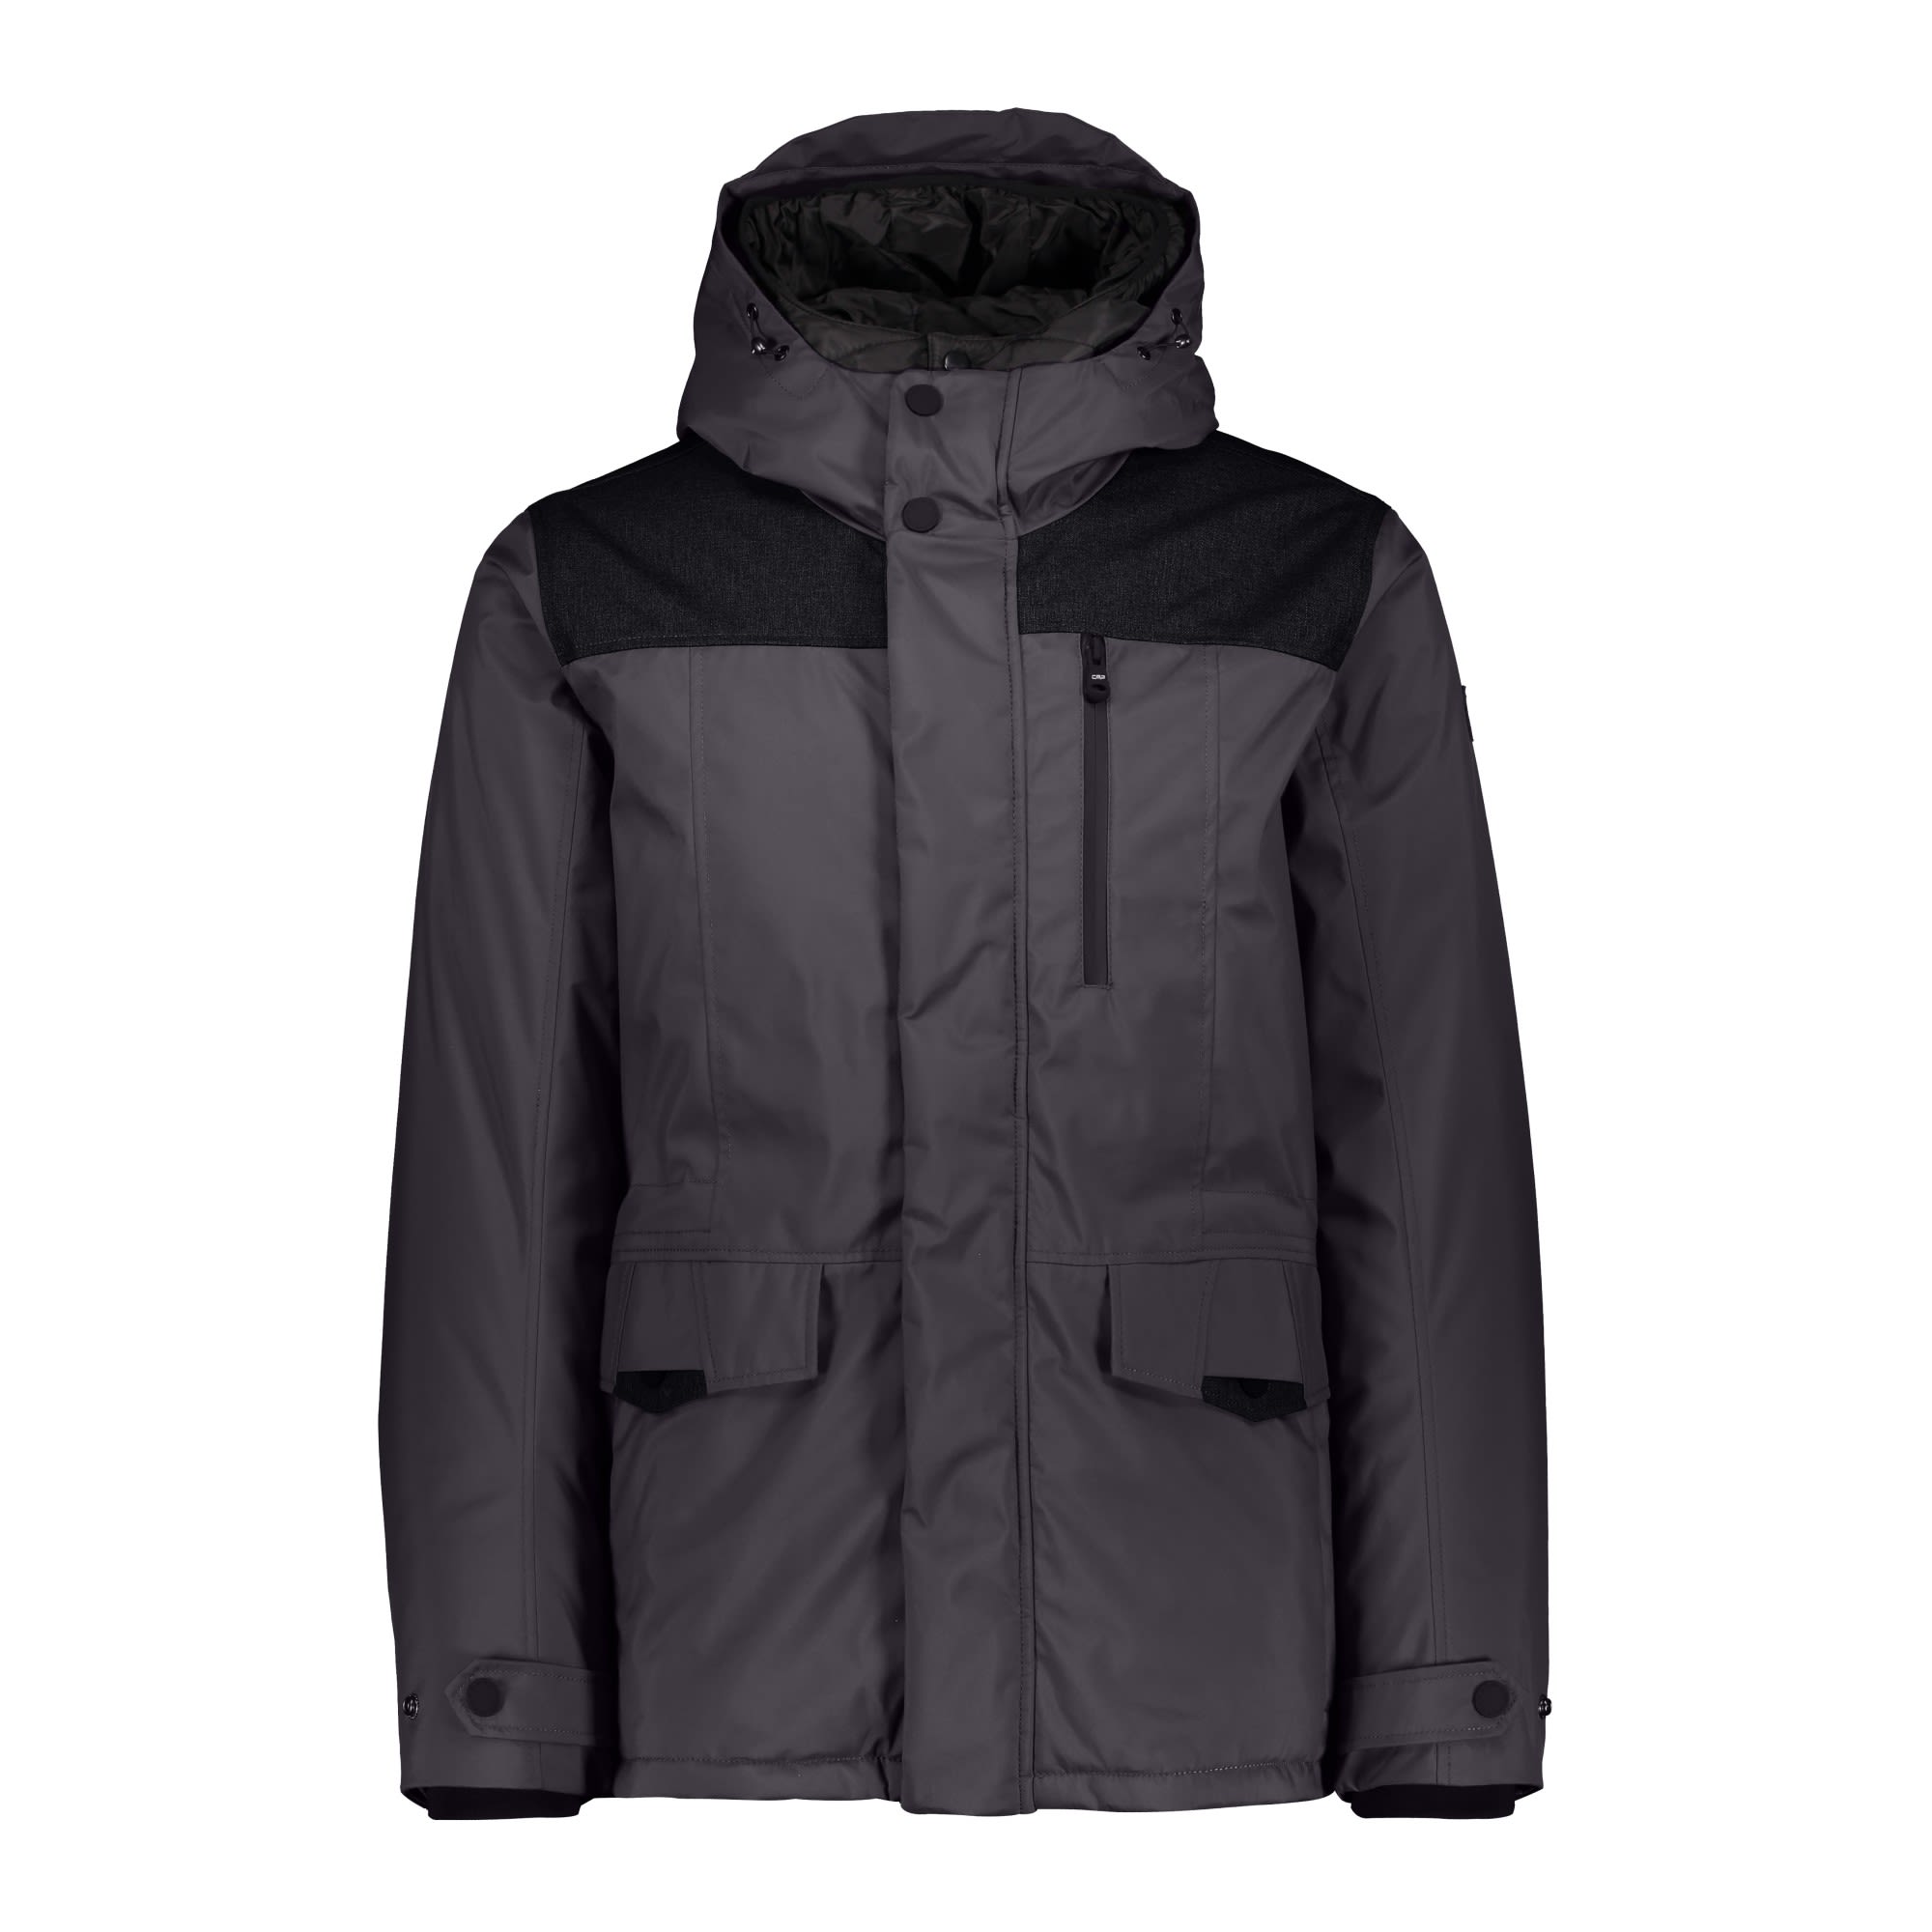 CMP Mid Jacket Zip Hood Polyester Grau- Male Anoraks- Grsse 50 - Farbe Antracite